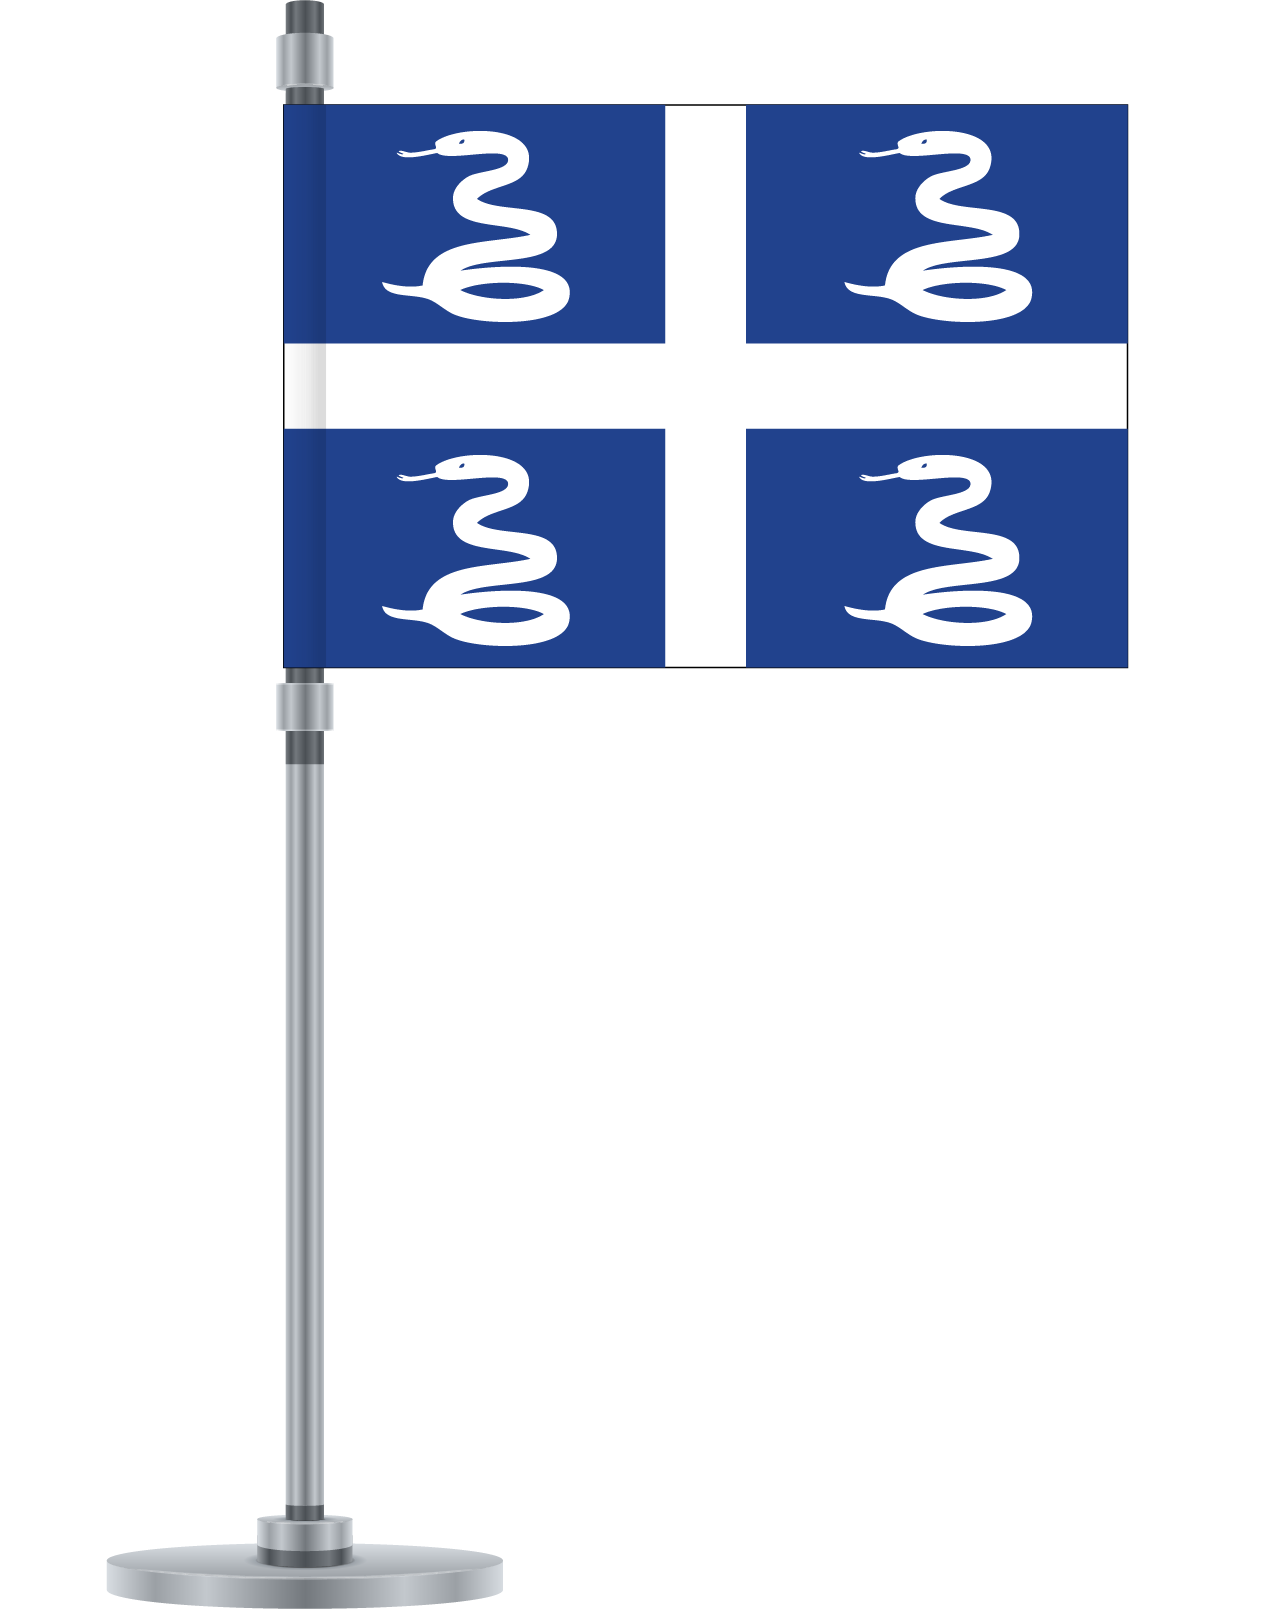 Martinique flag